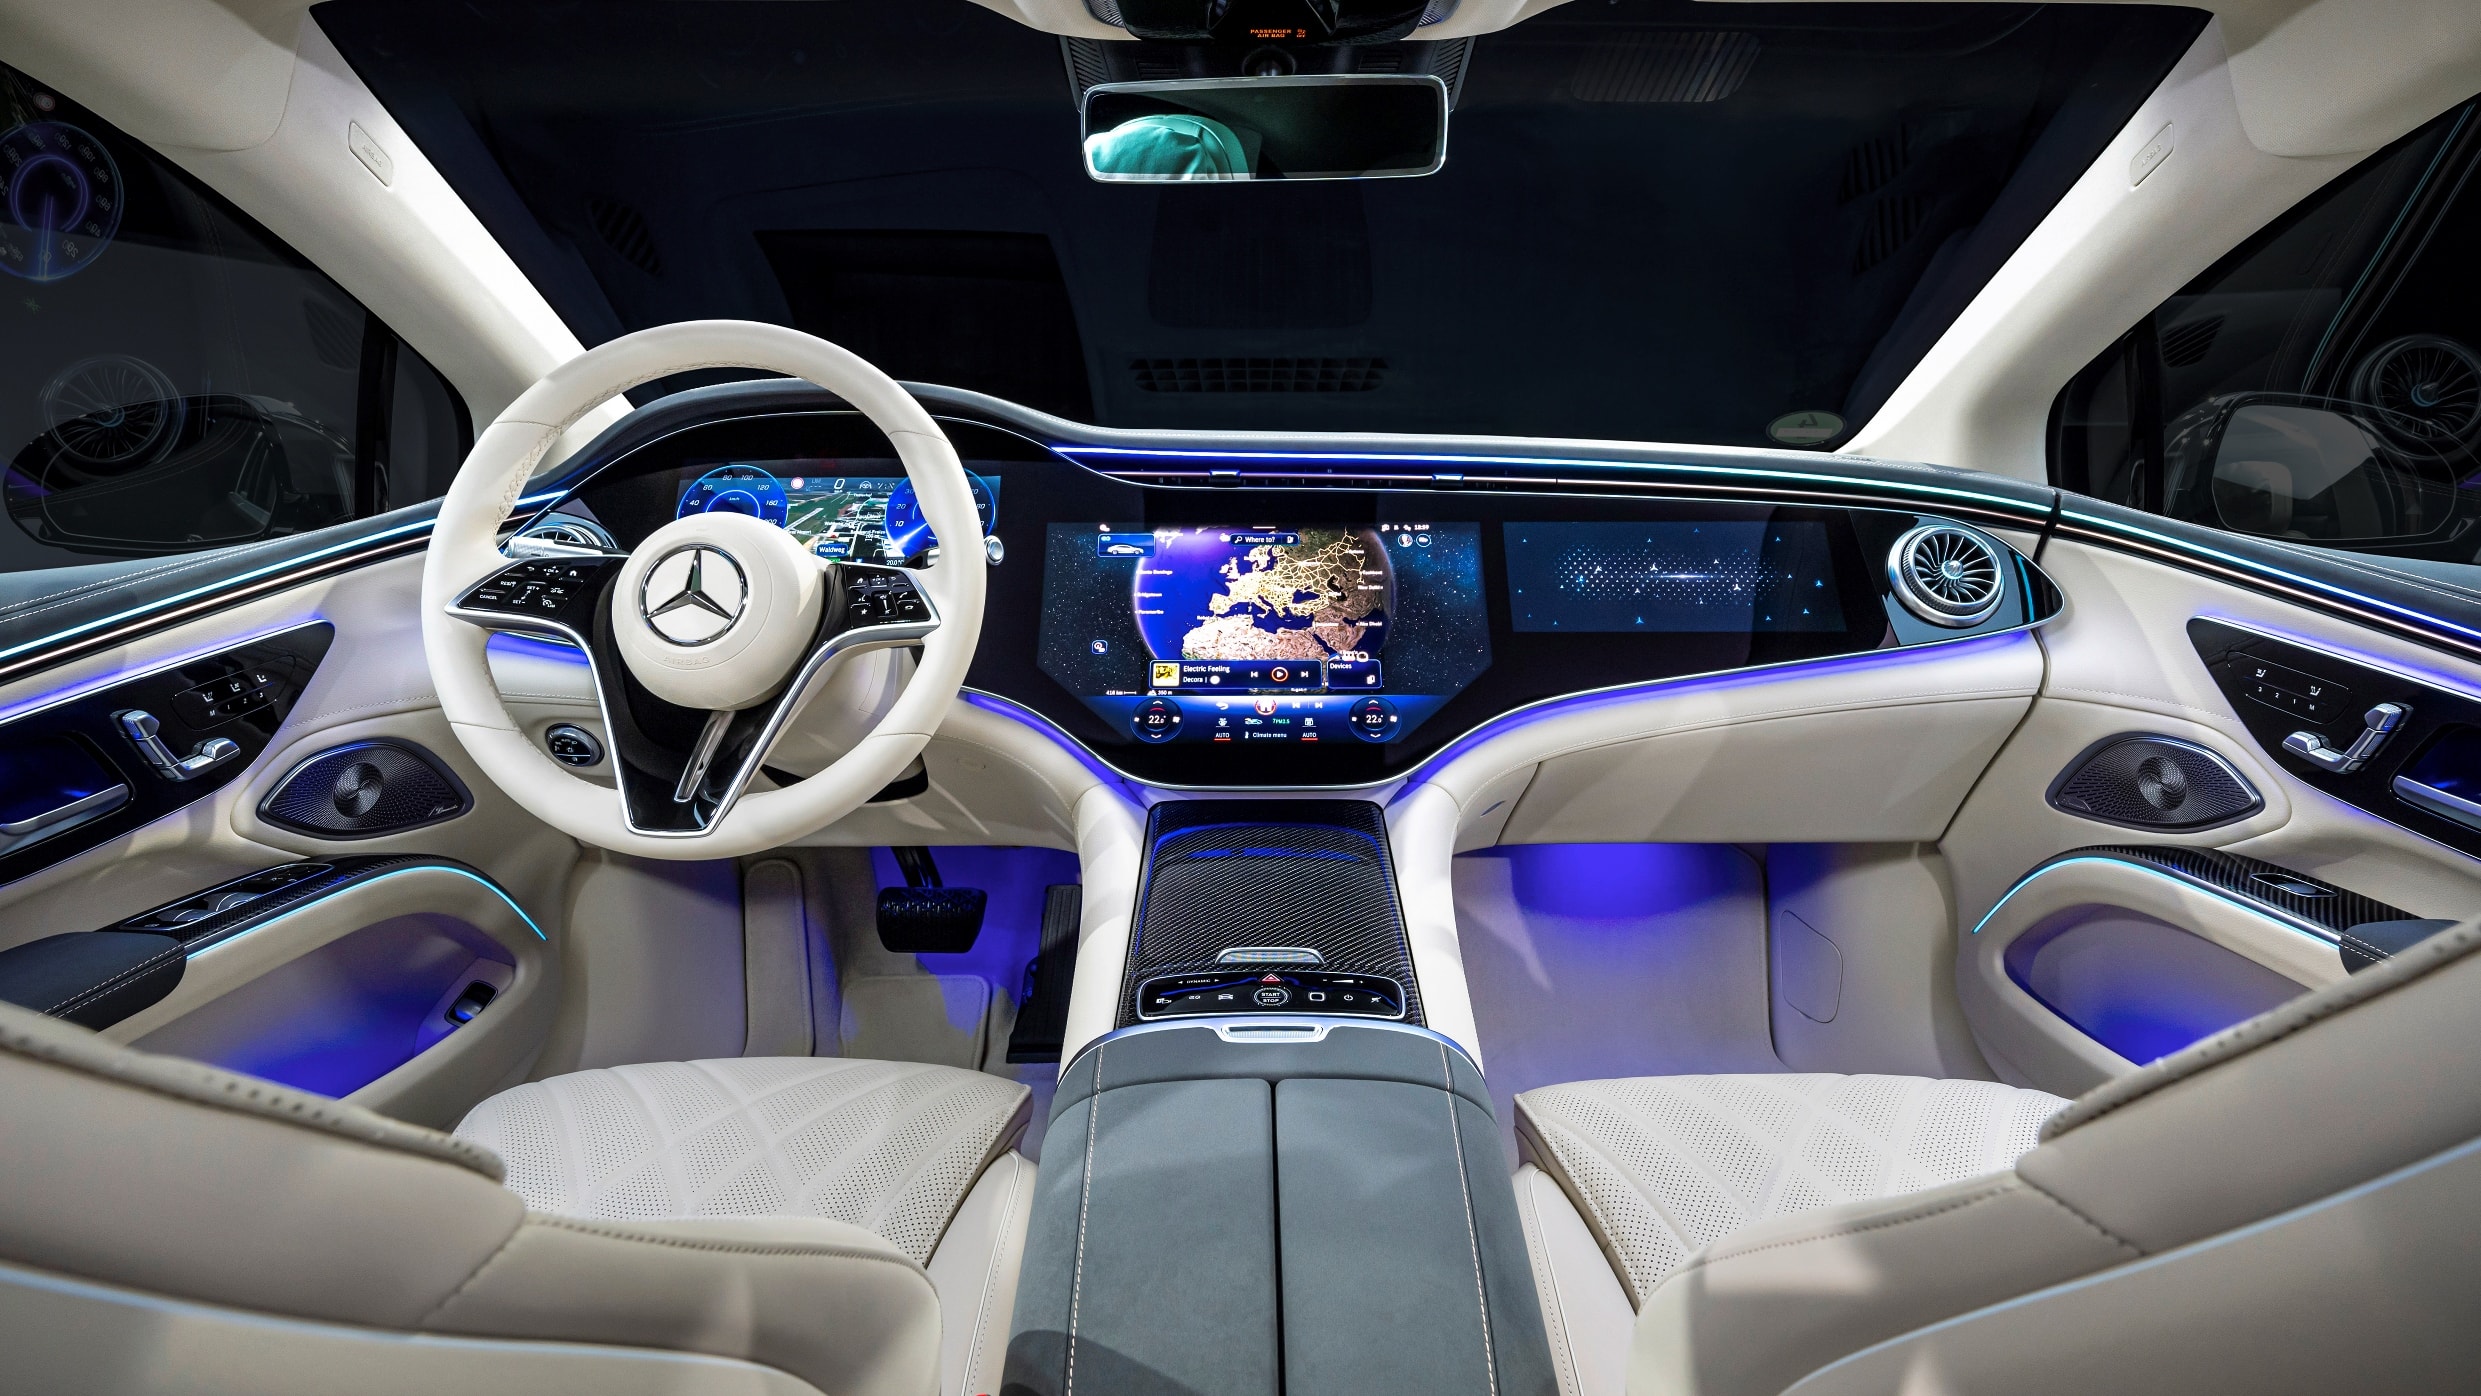 Mercedes-Benz's Electric Vehicle